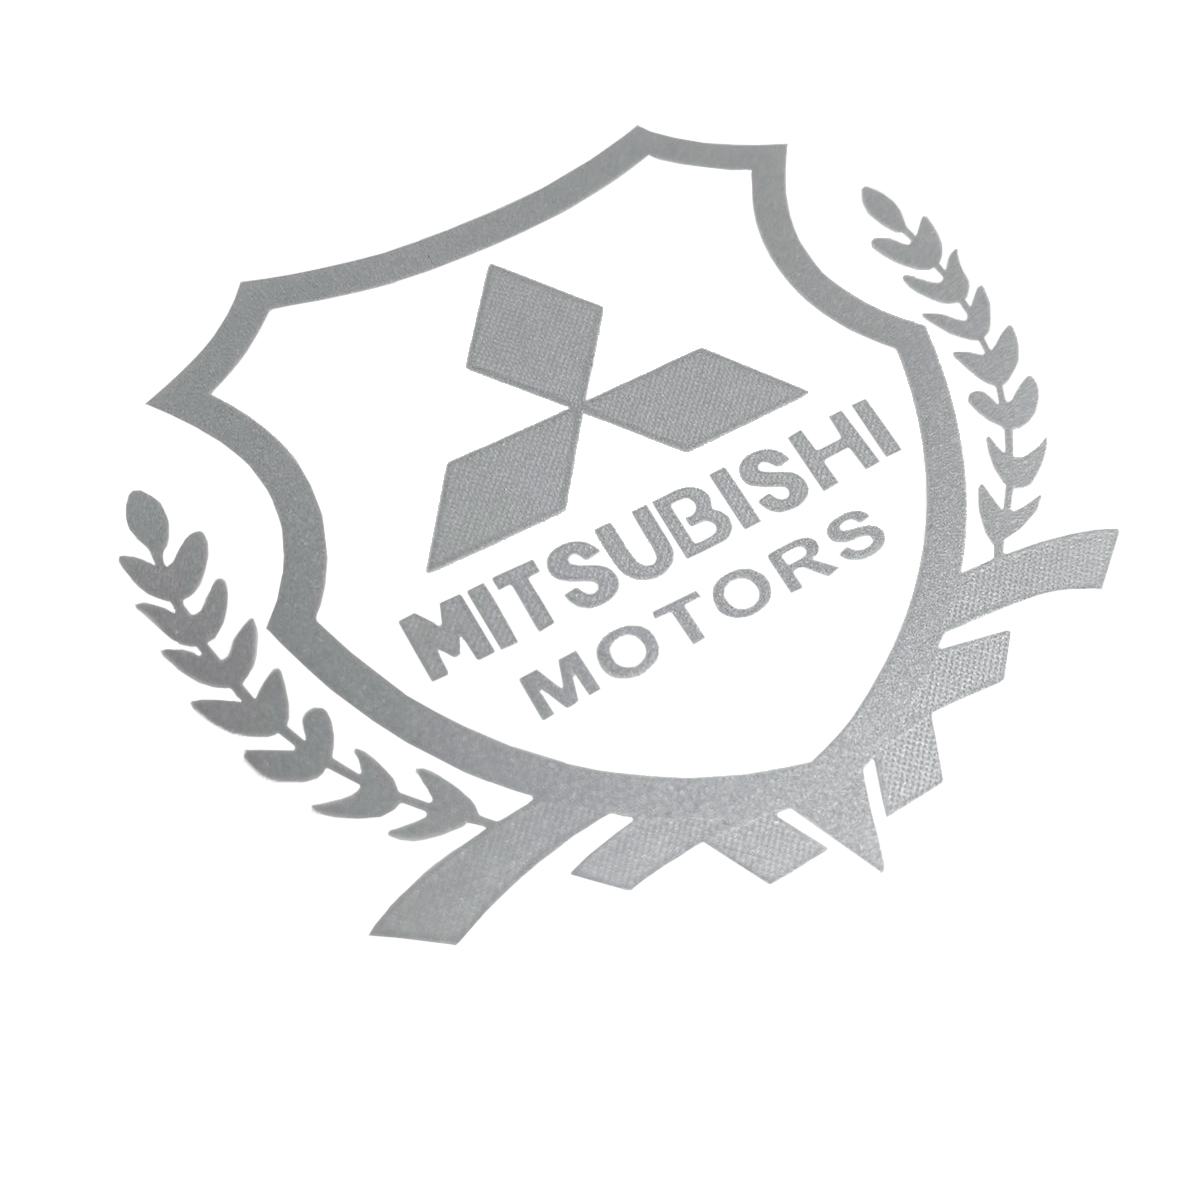 Emblema Mitsubishi Ralliart Triton, Pajero, Lancer Resinado